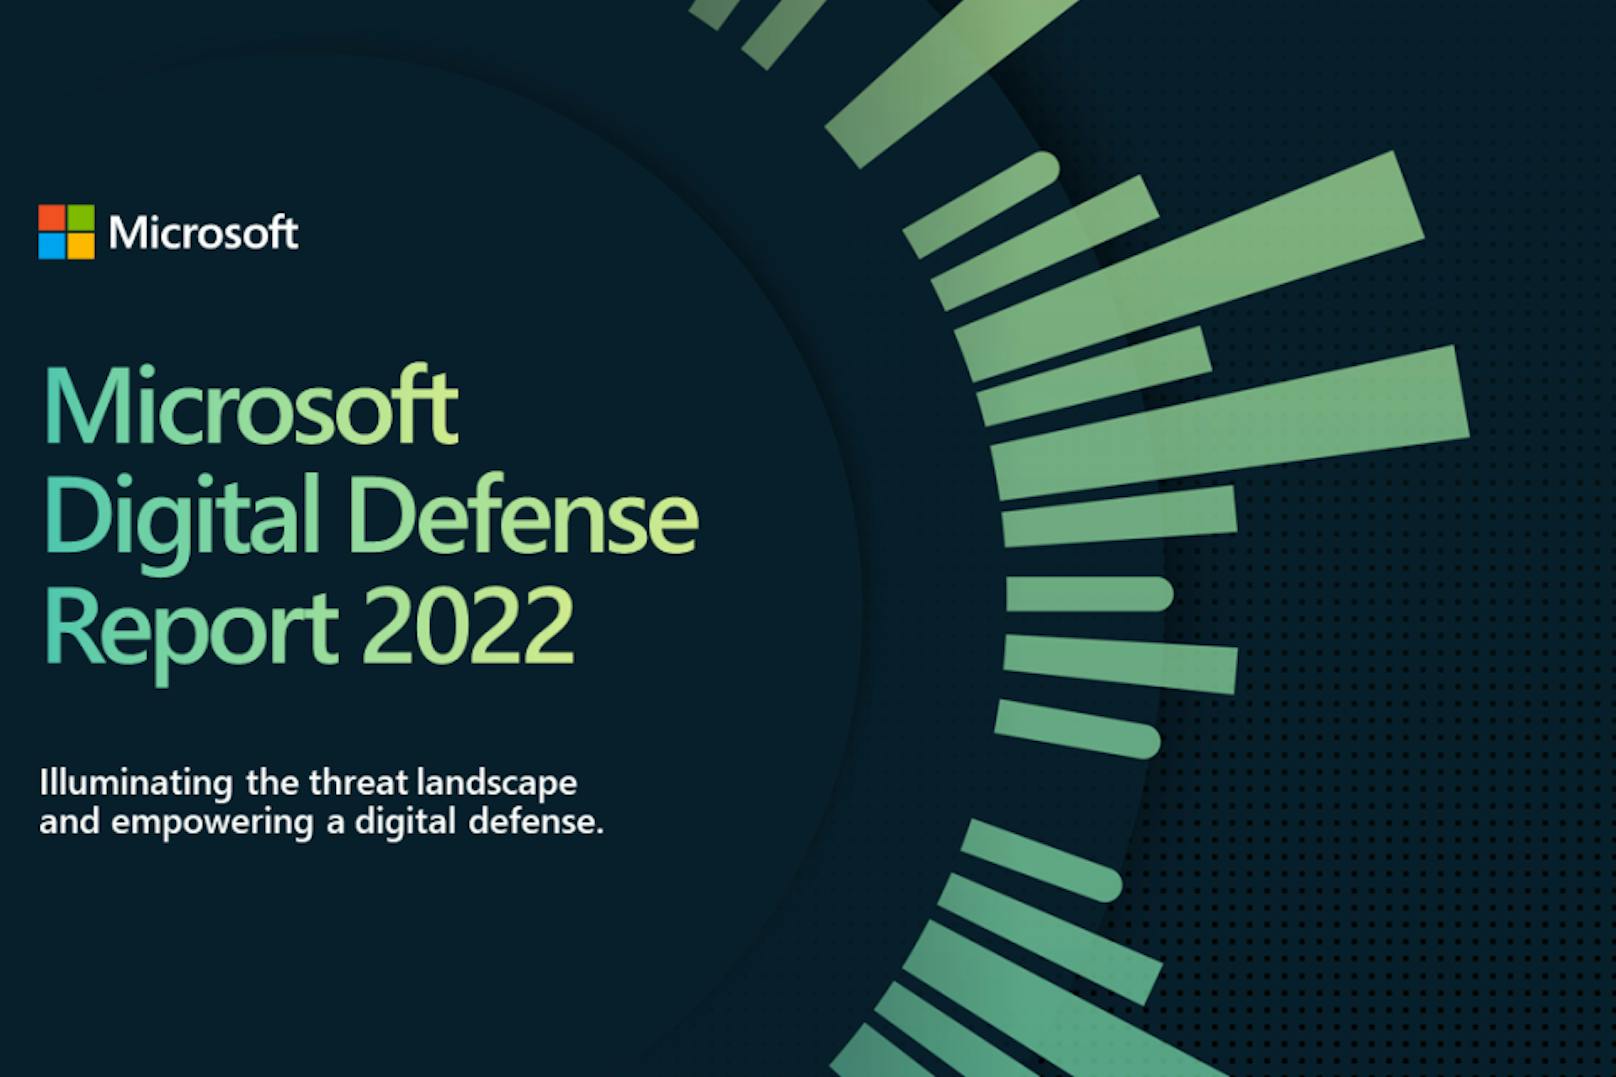 Microsoft Digital Defense Report: Autoritäre Staaten verstärken Cyber-Angriffe auf kritische Infrastrukturen.